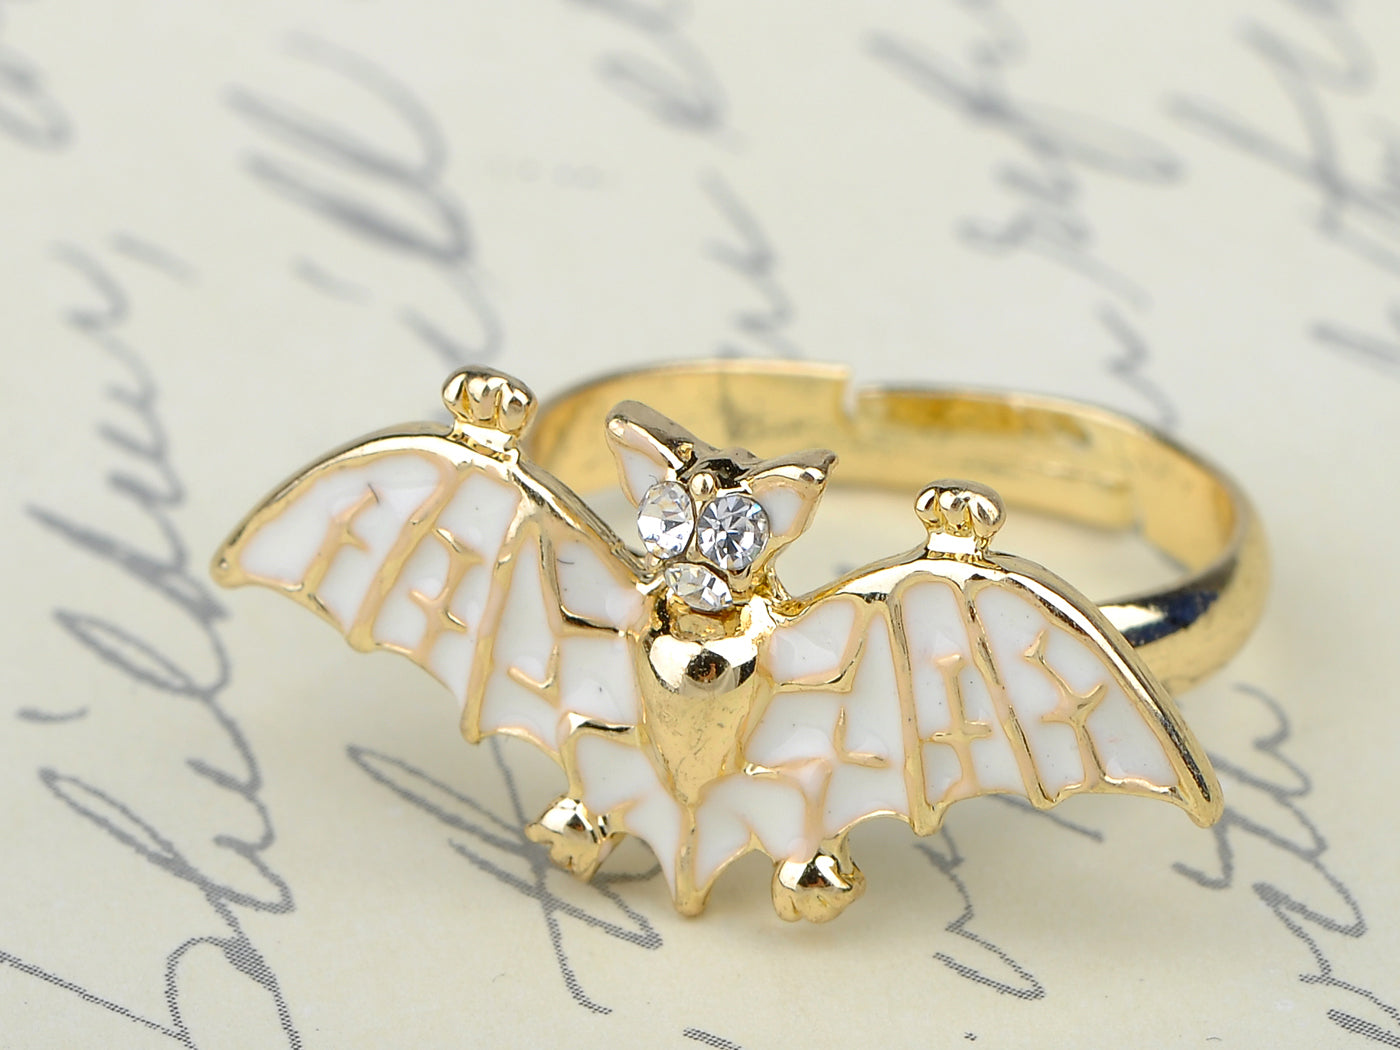 Petite Enamel Hand Painted Flying Bat Night Creature Ring